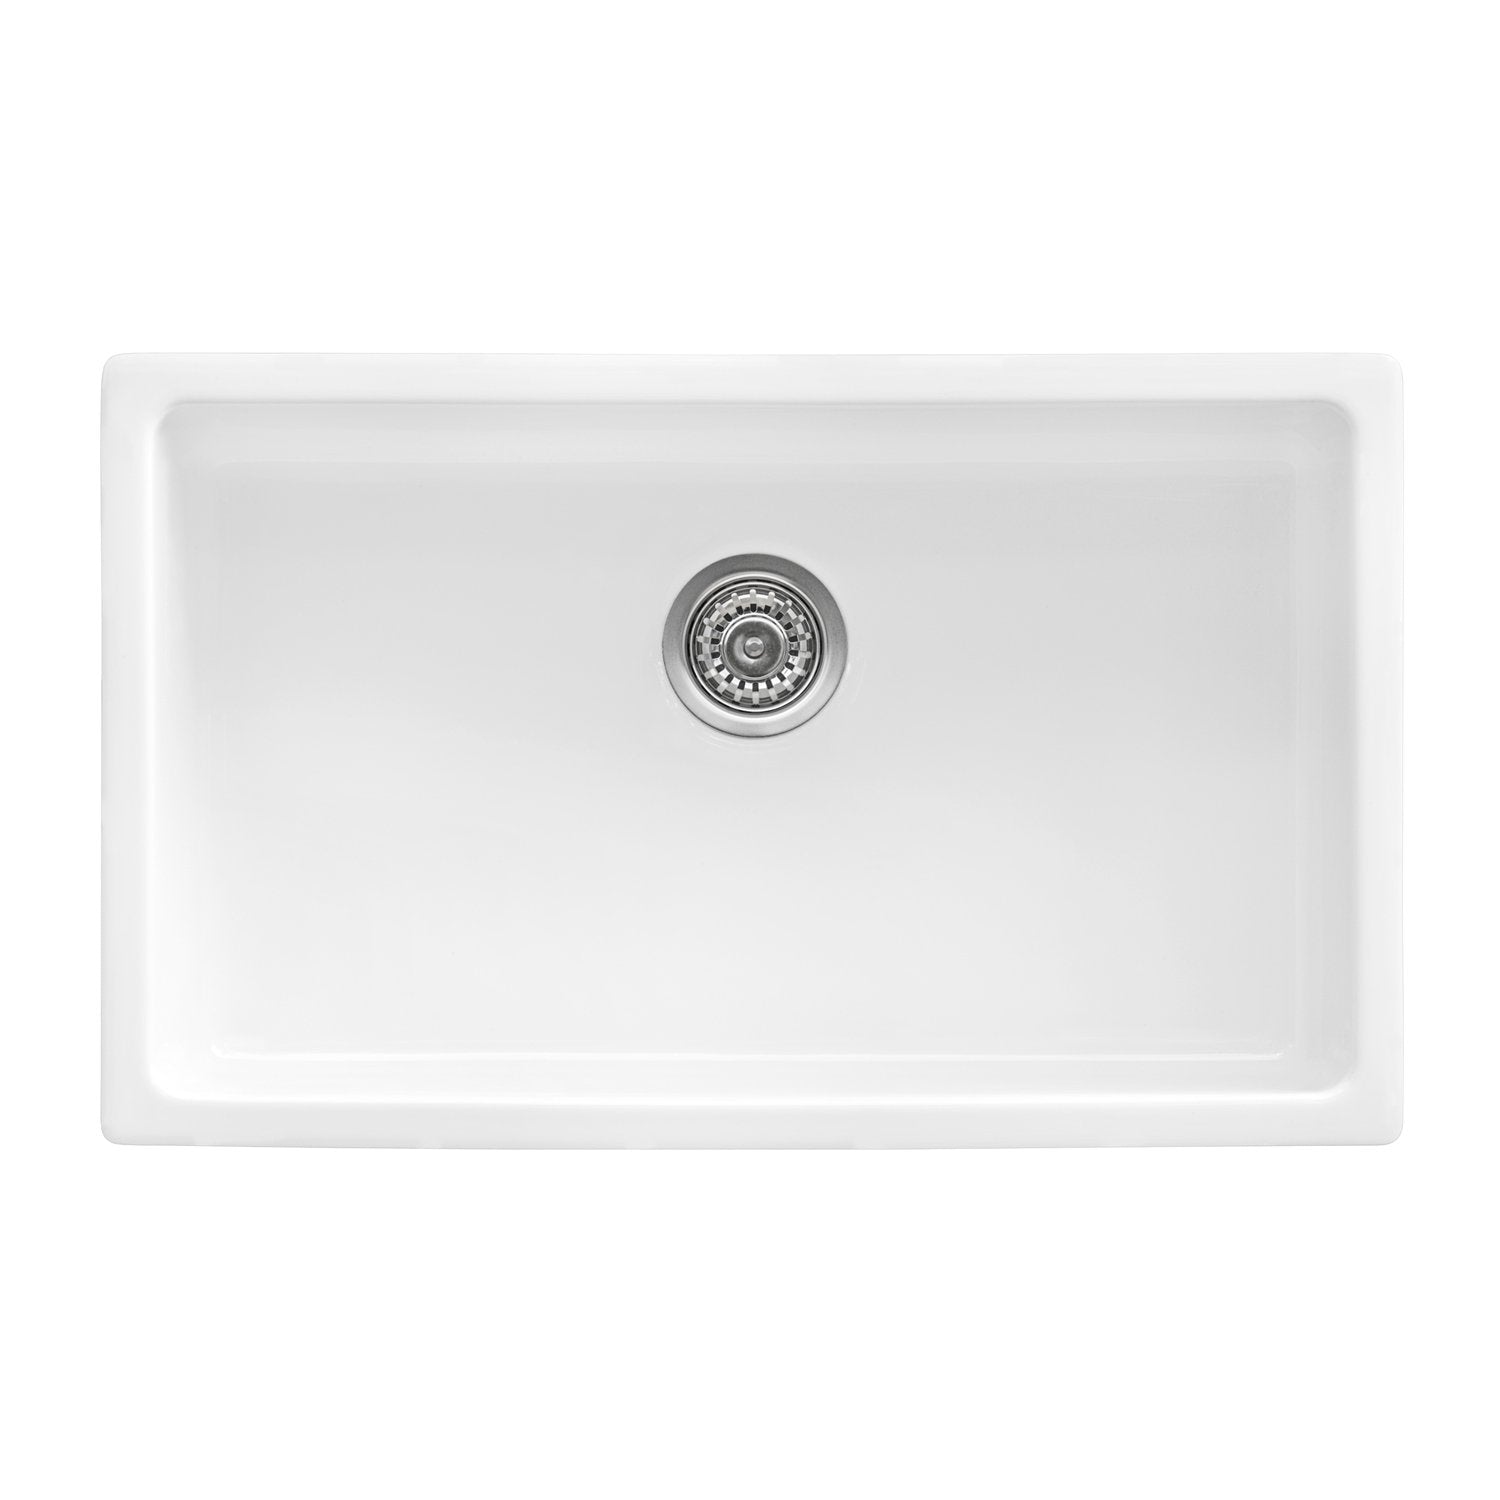 Ruvati 30" Fireclay Undermount / Topmount Single Bowl Kitchen Sink in White RVL3030WH